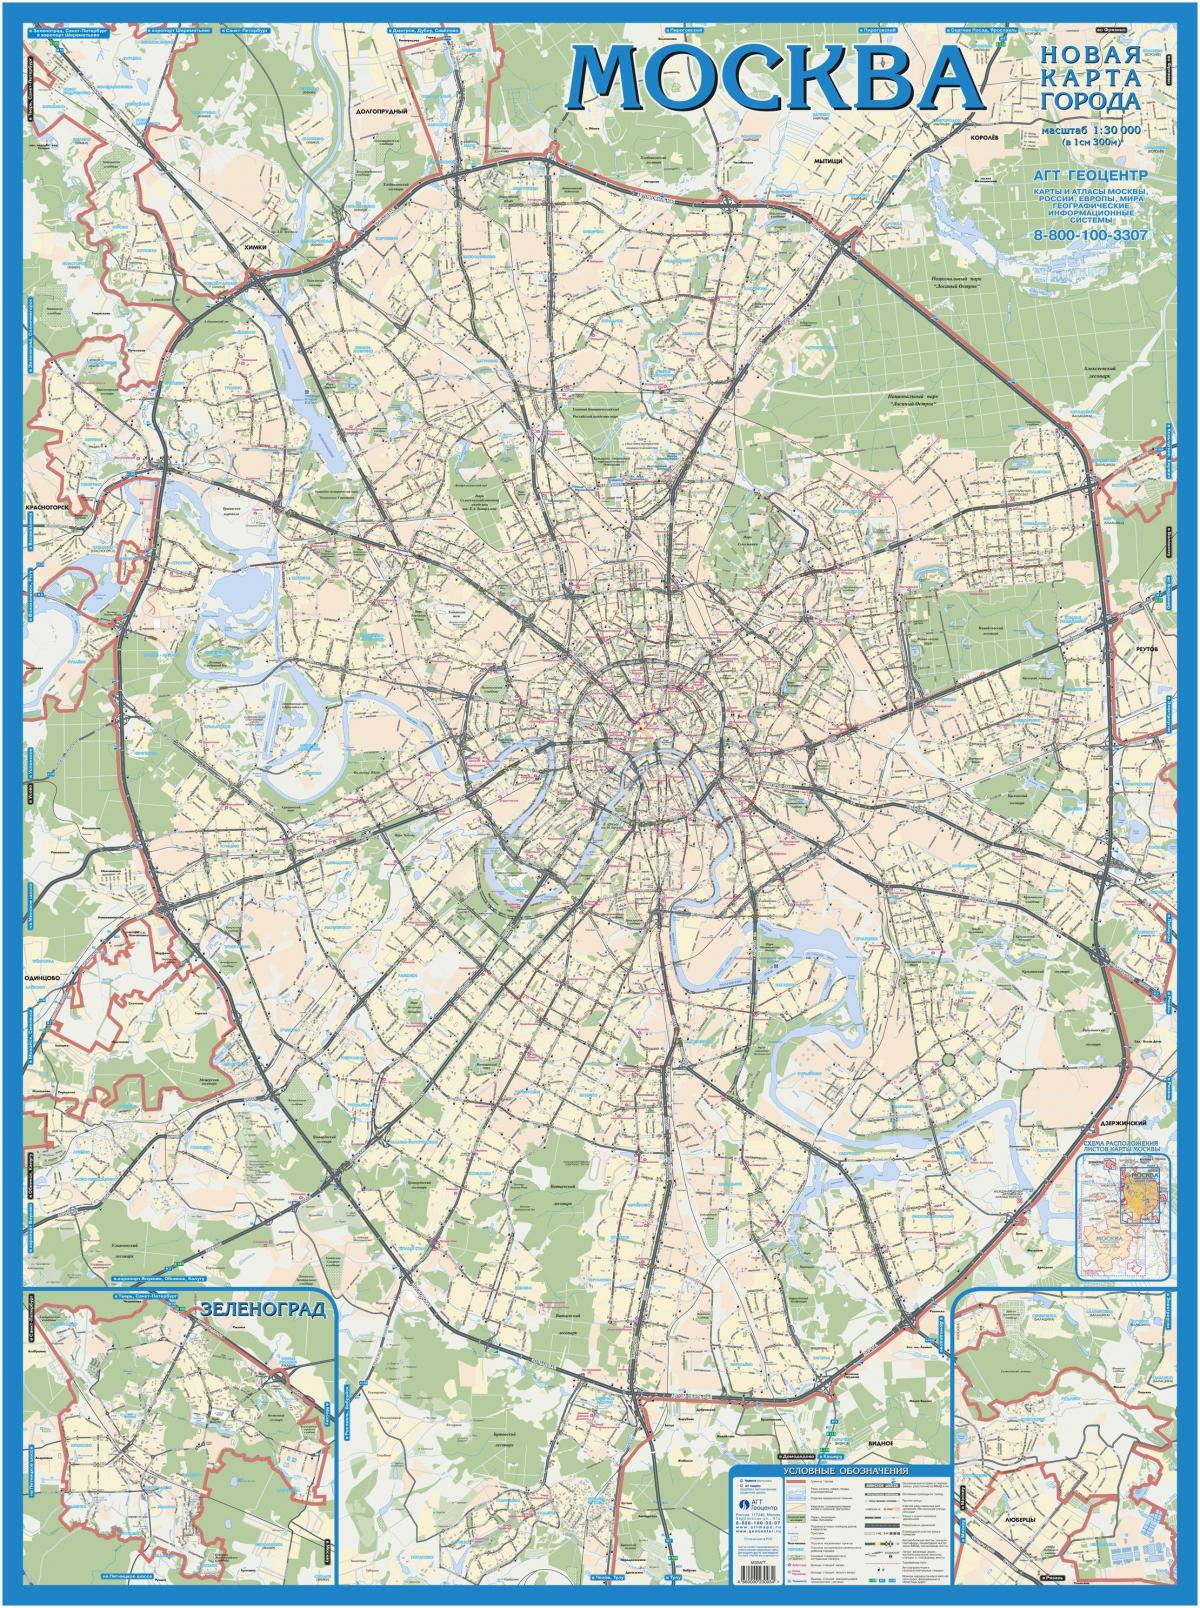 Moskva topographic வரைபடம்